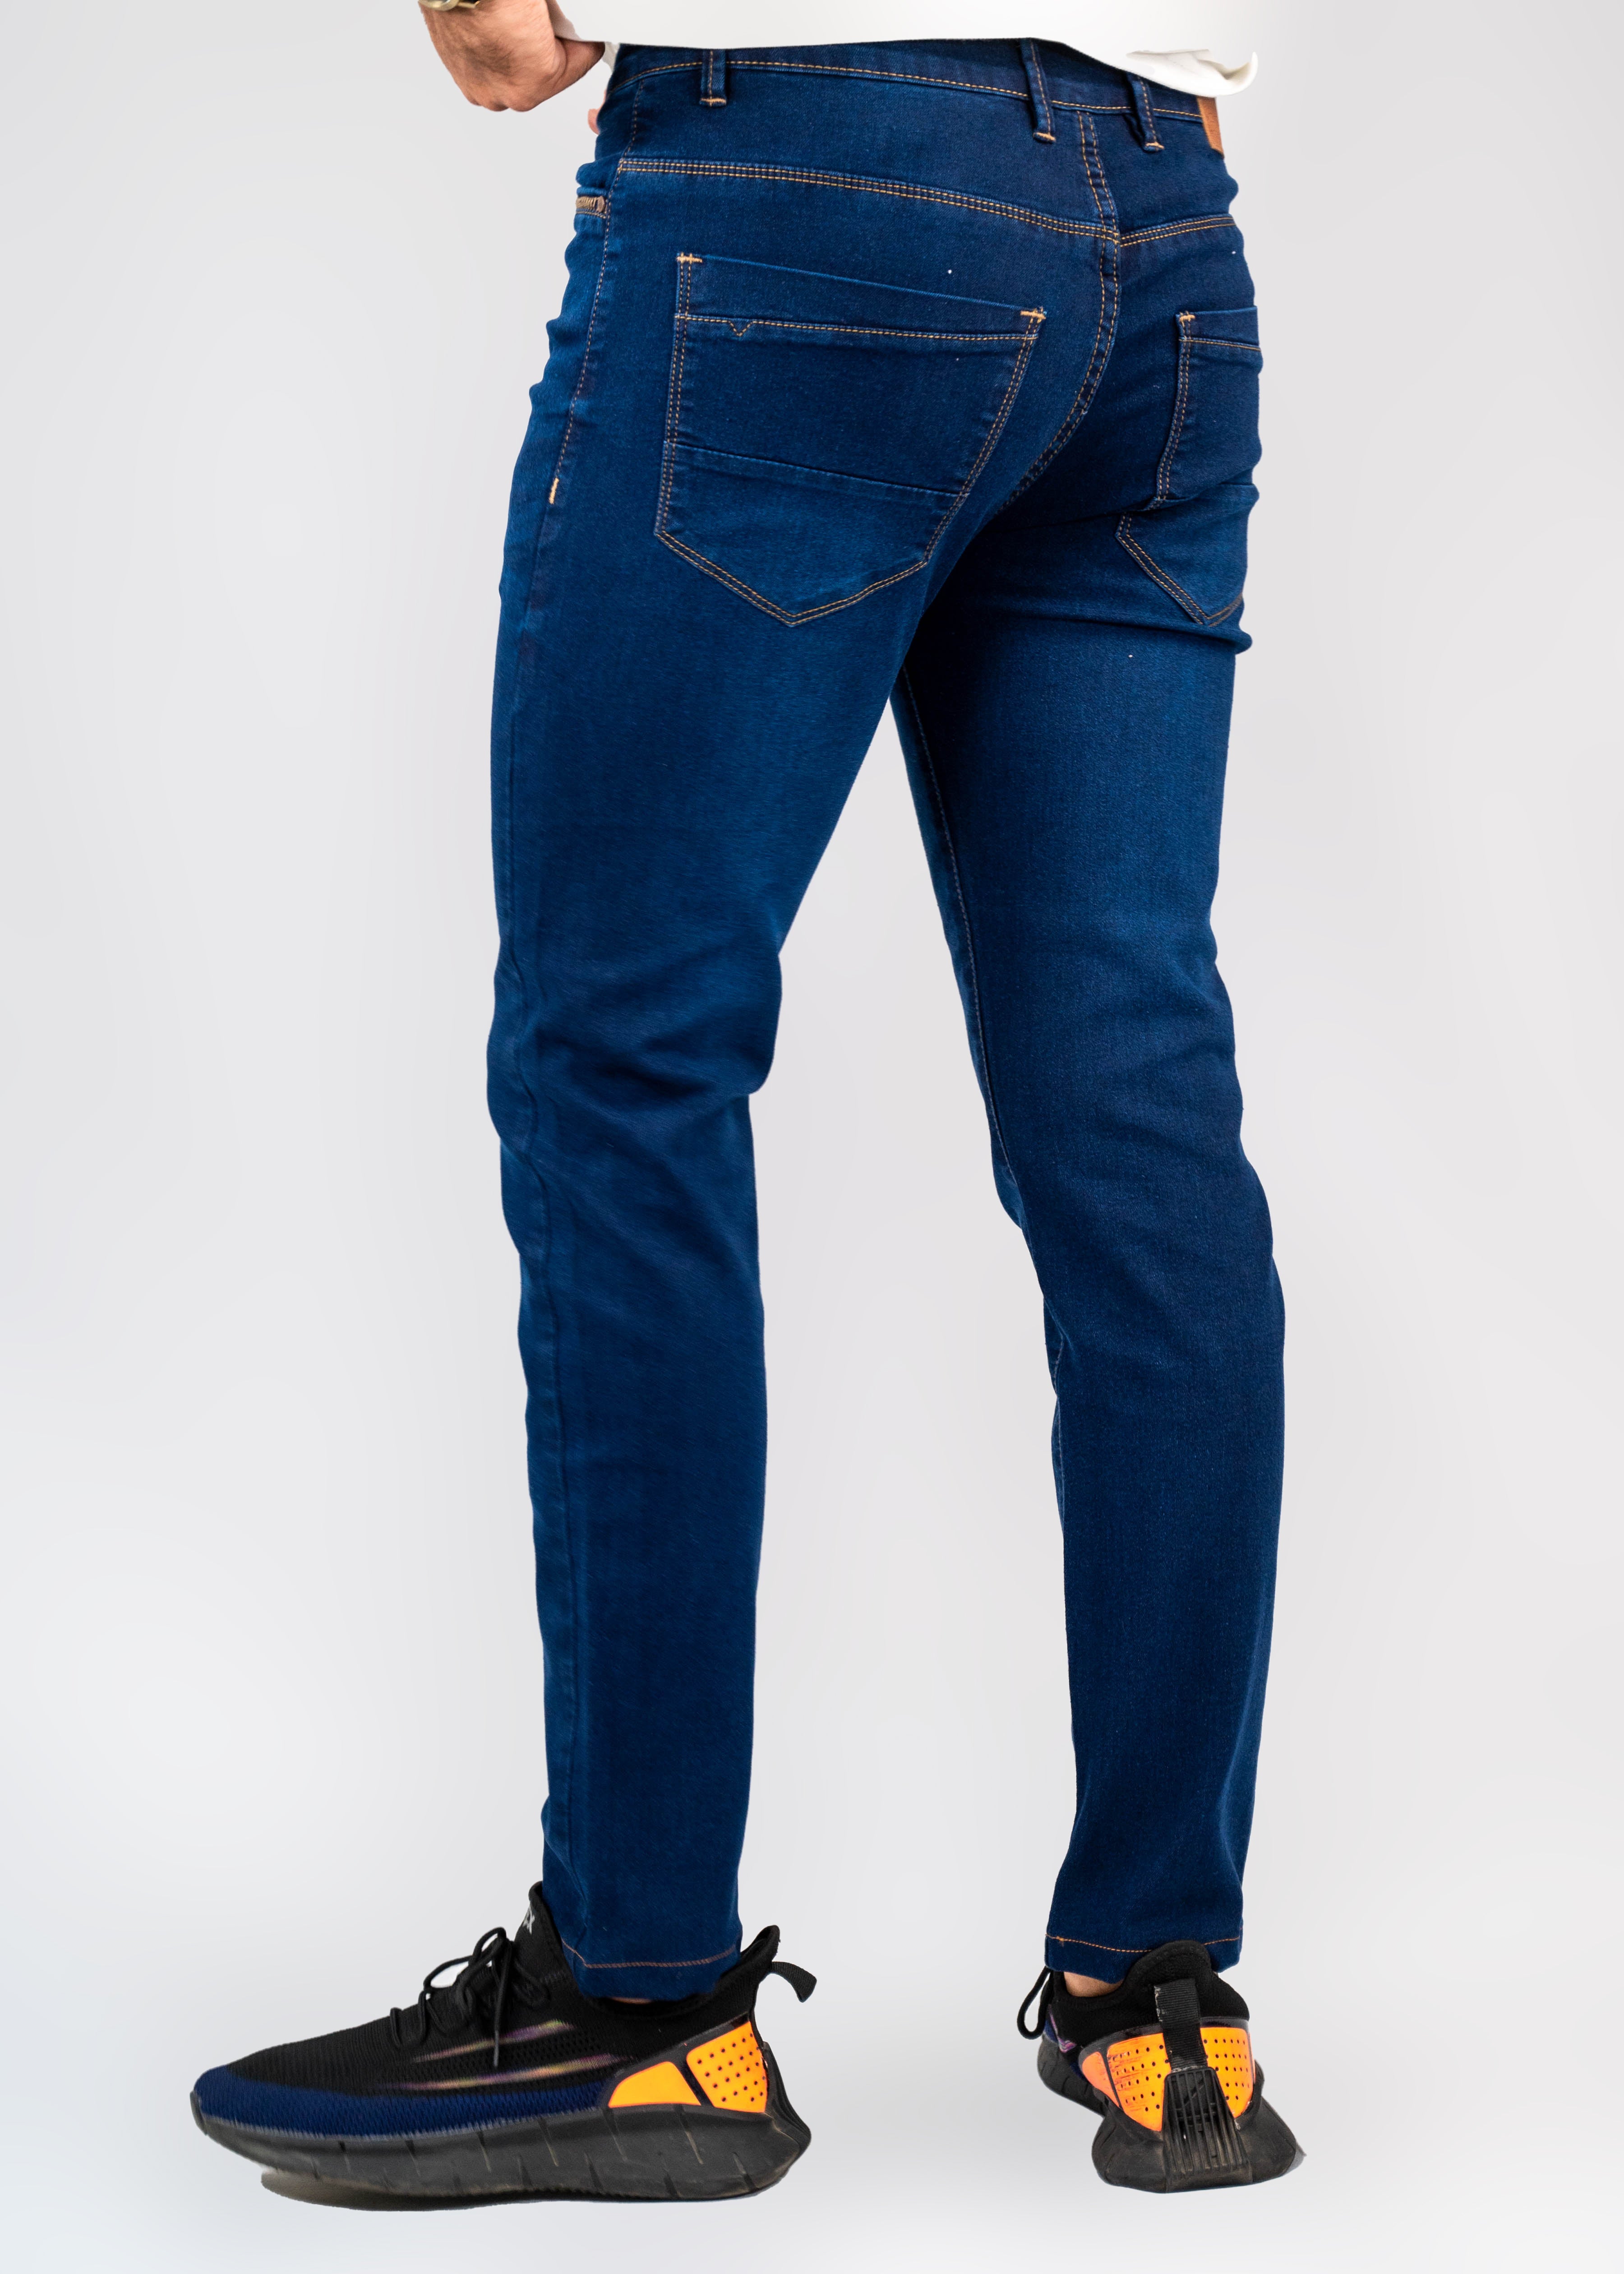 Oxford Blue Jeans